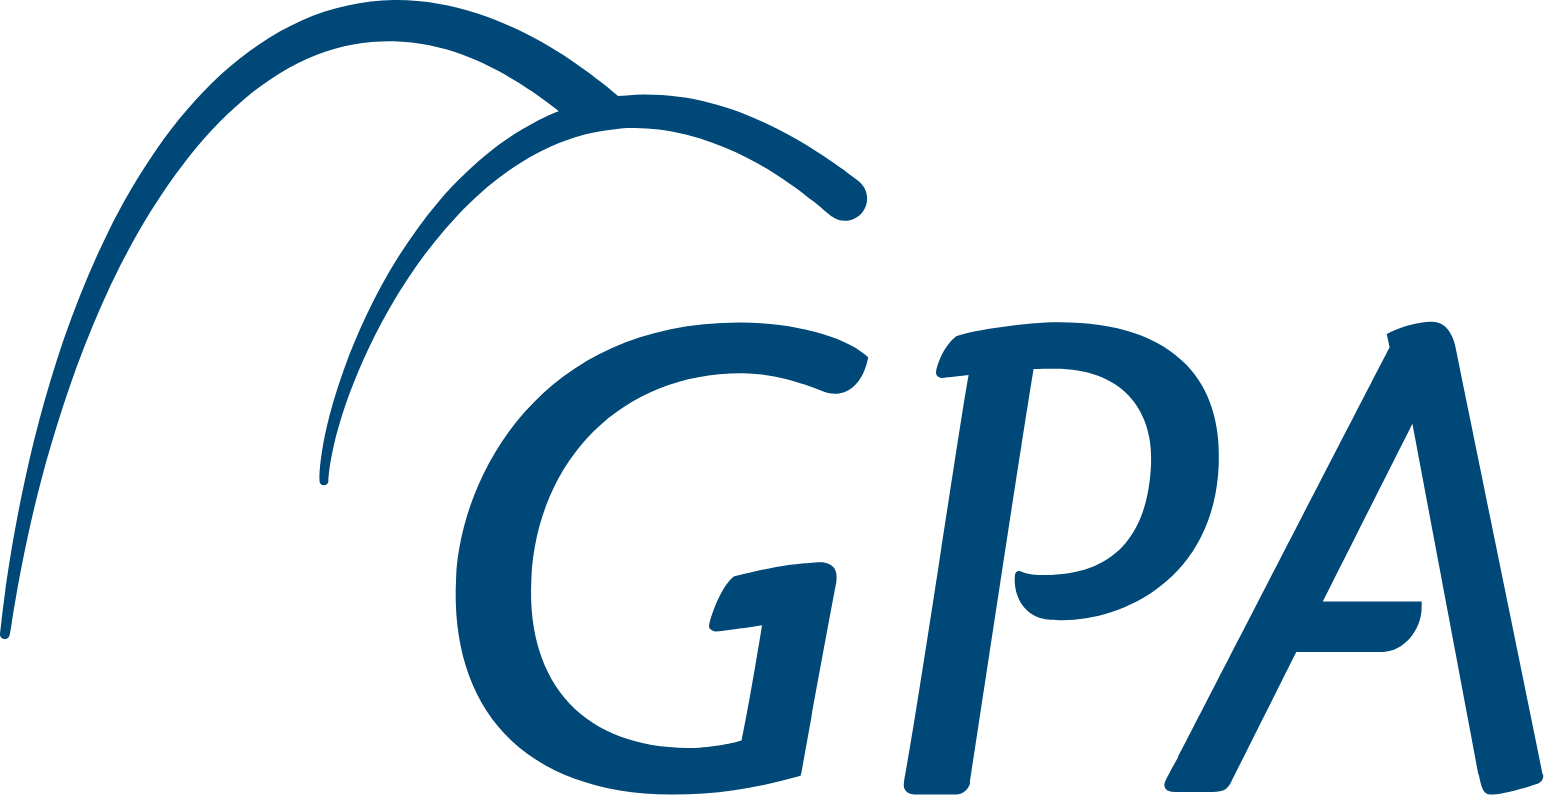 GPA logo large (transparent PNG)